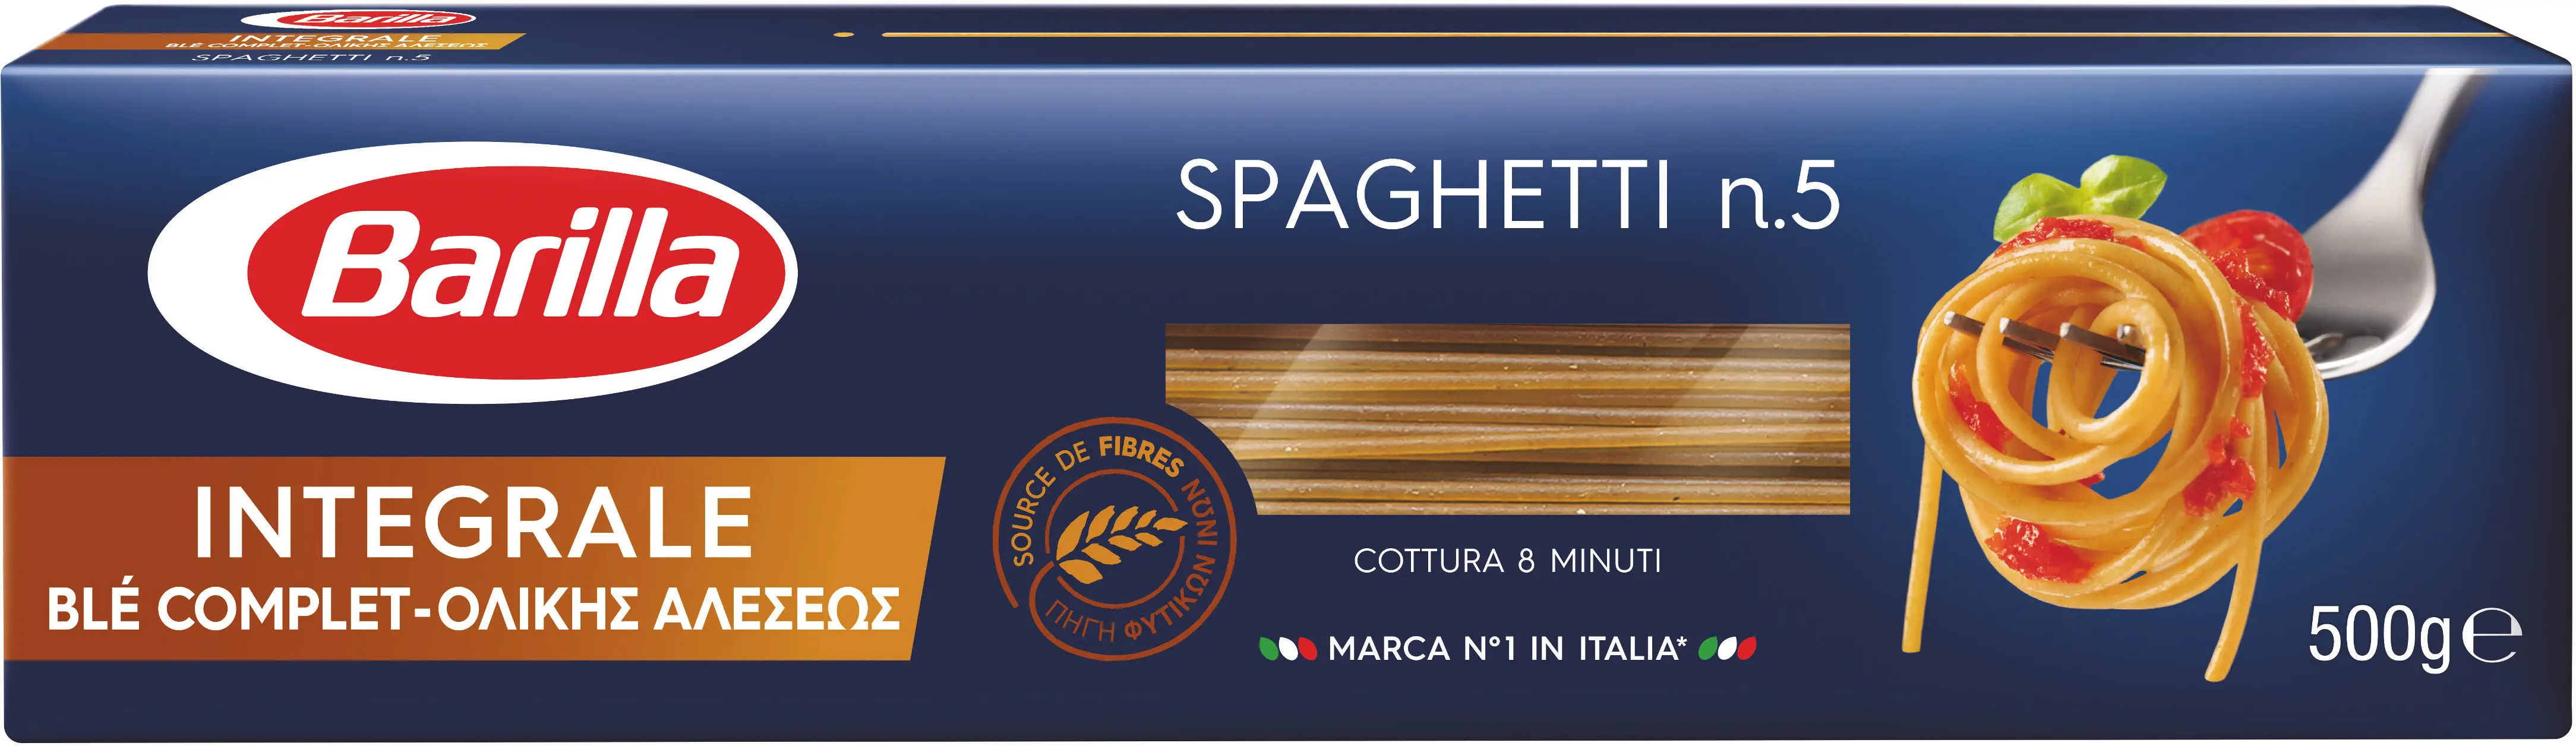 Spaghetti Barilla 500 g n.5